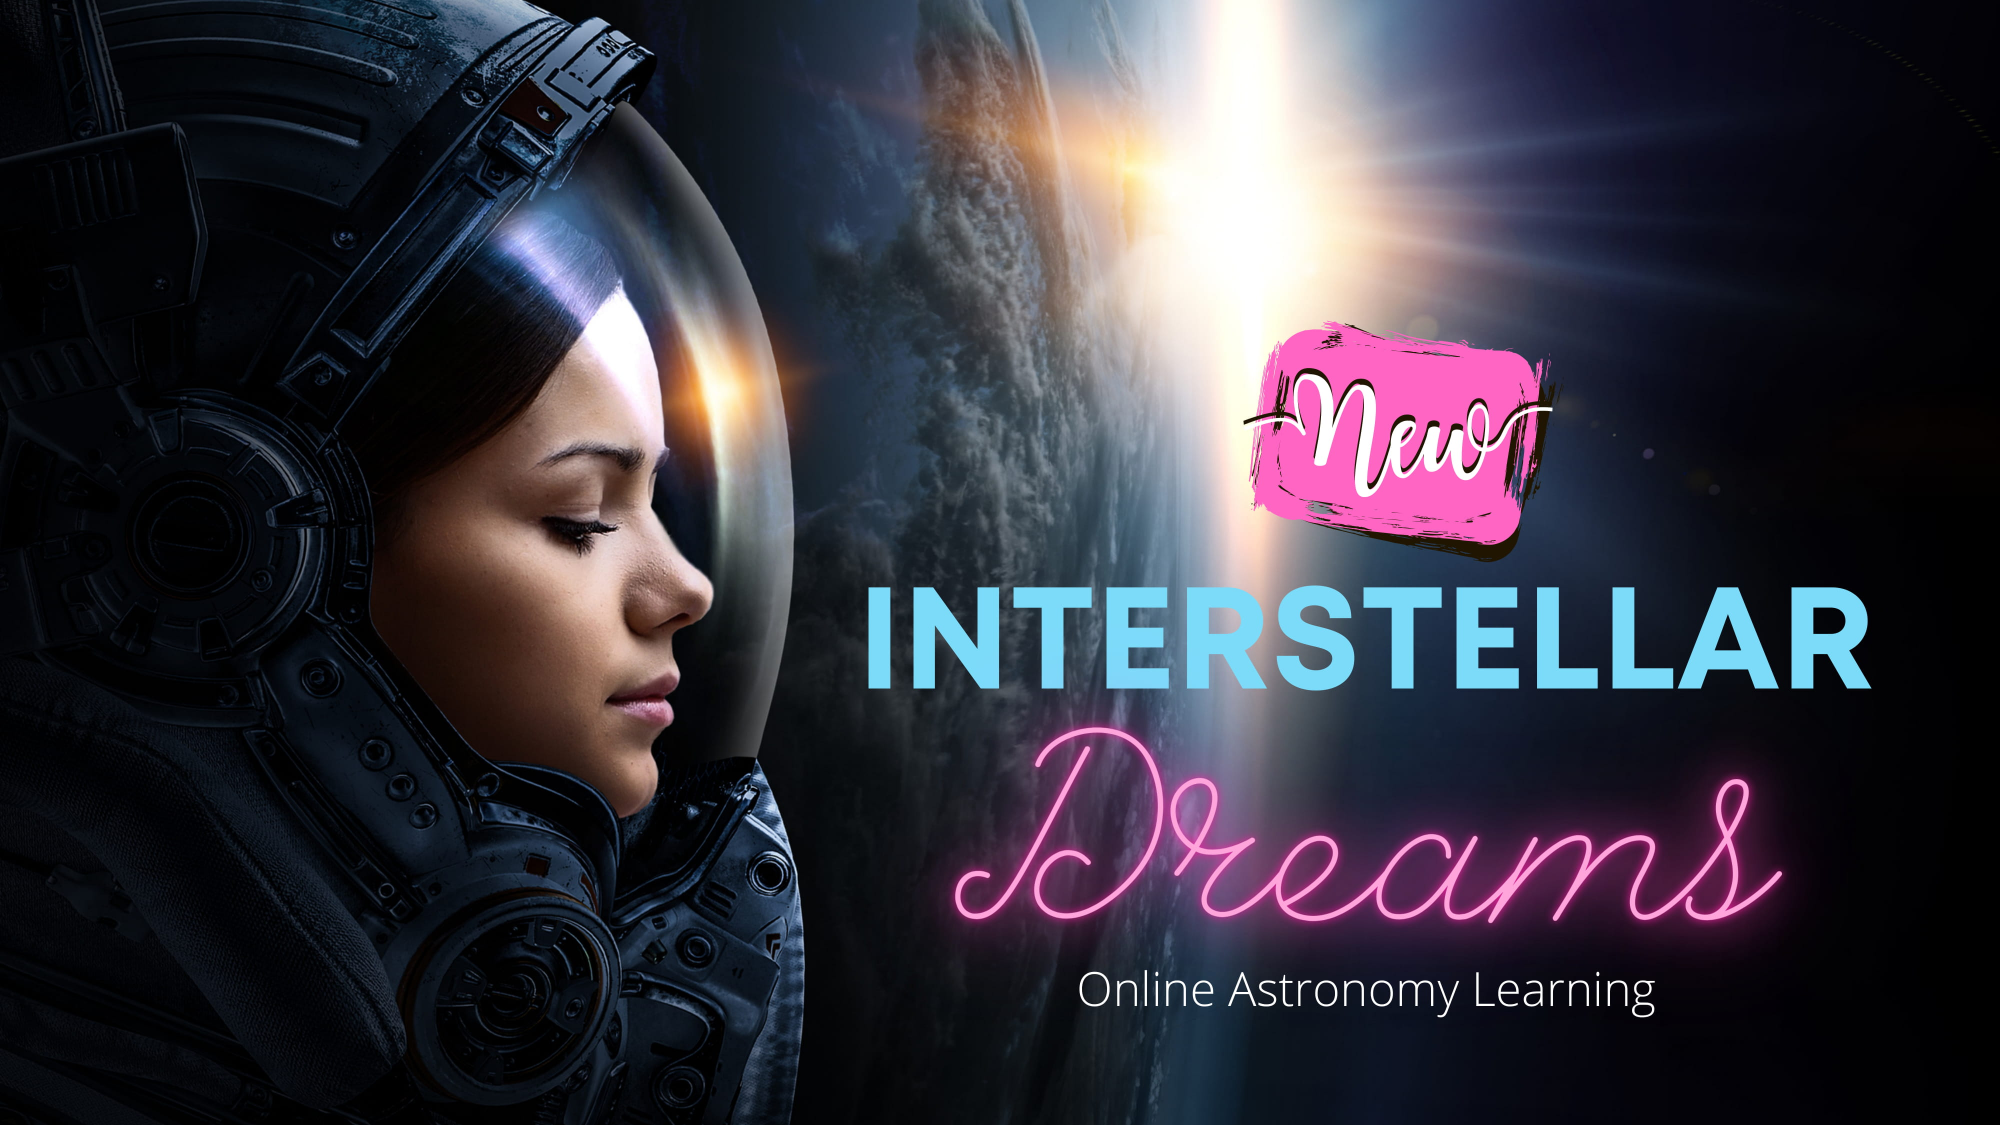 Interstellar Dreams 